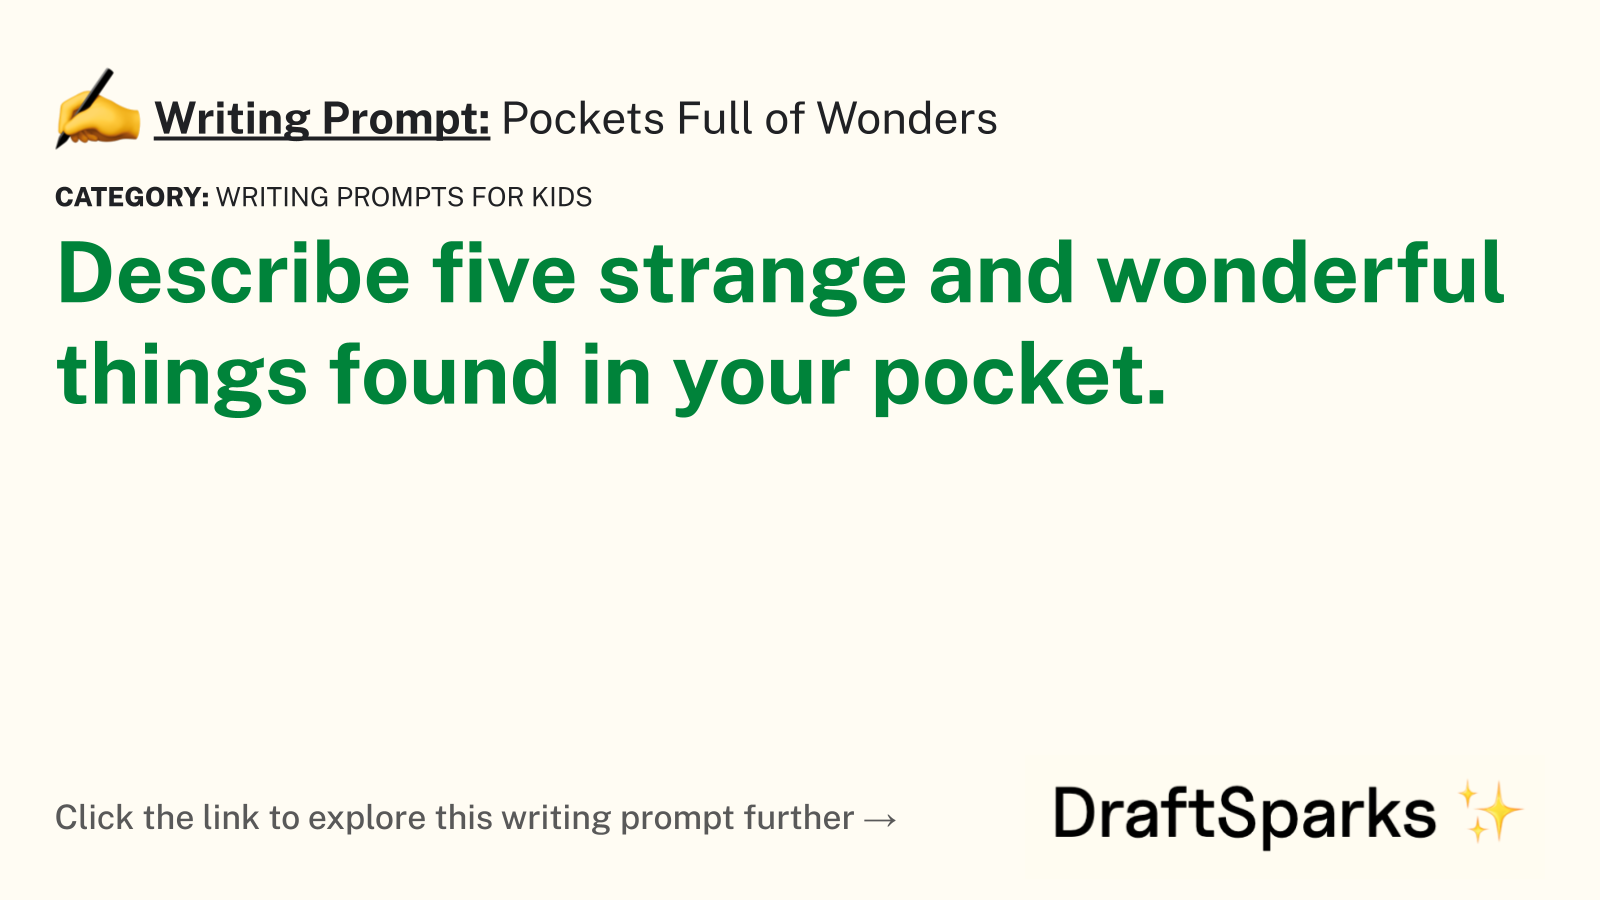 Pockets Full of Wonders